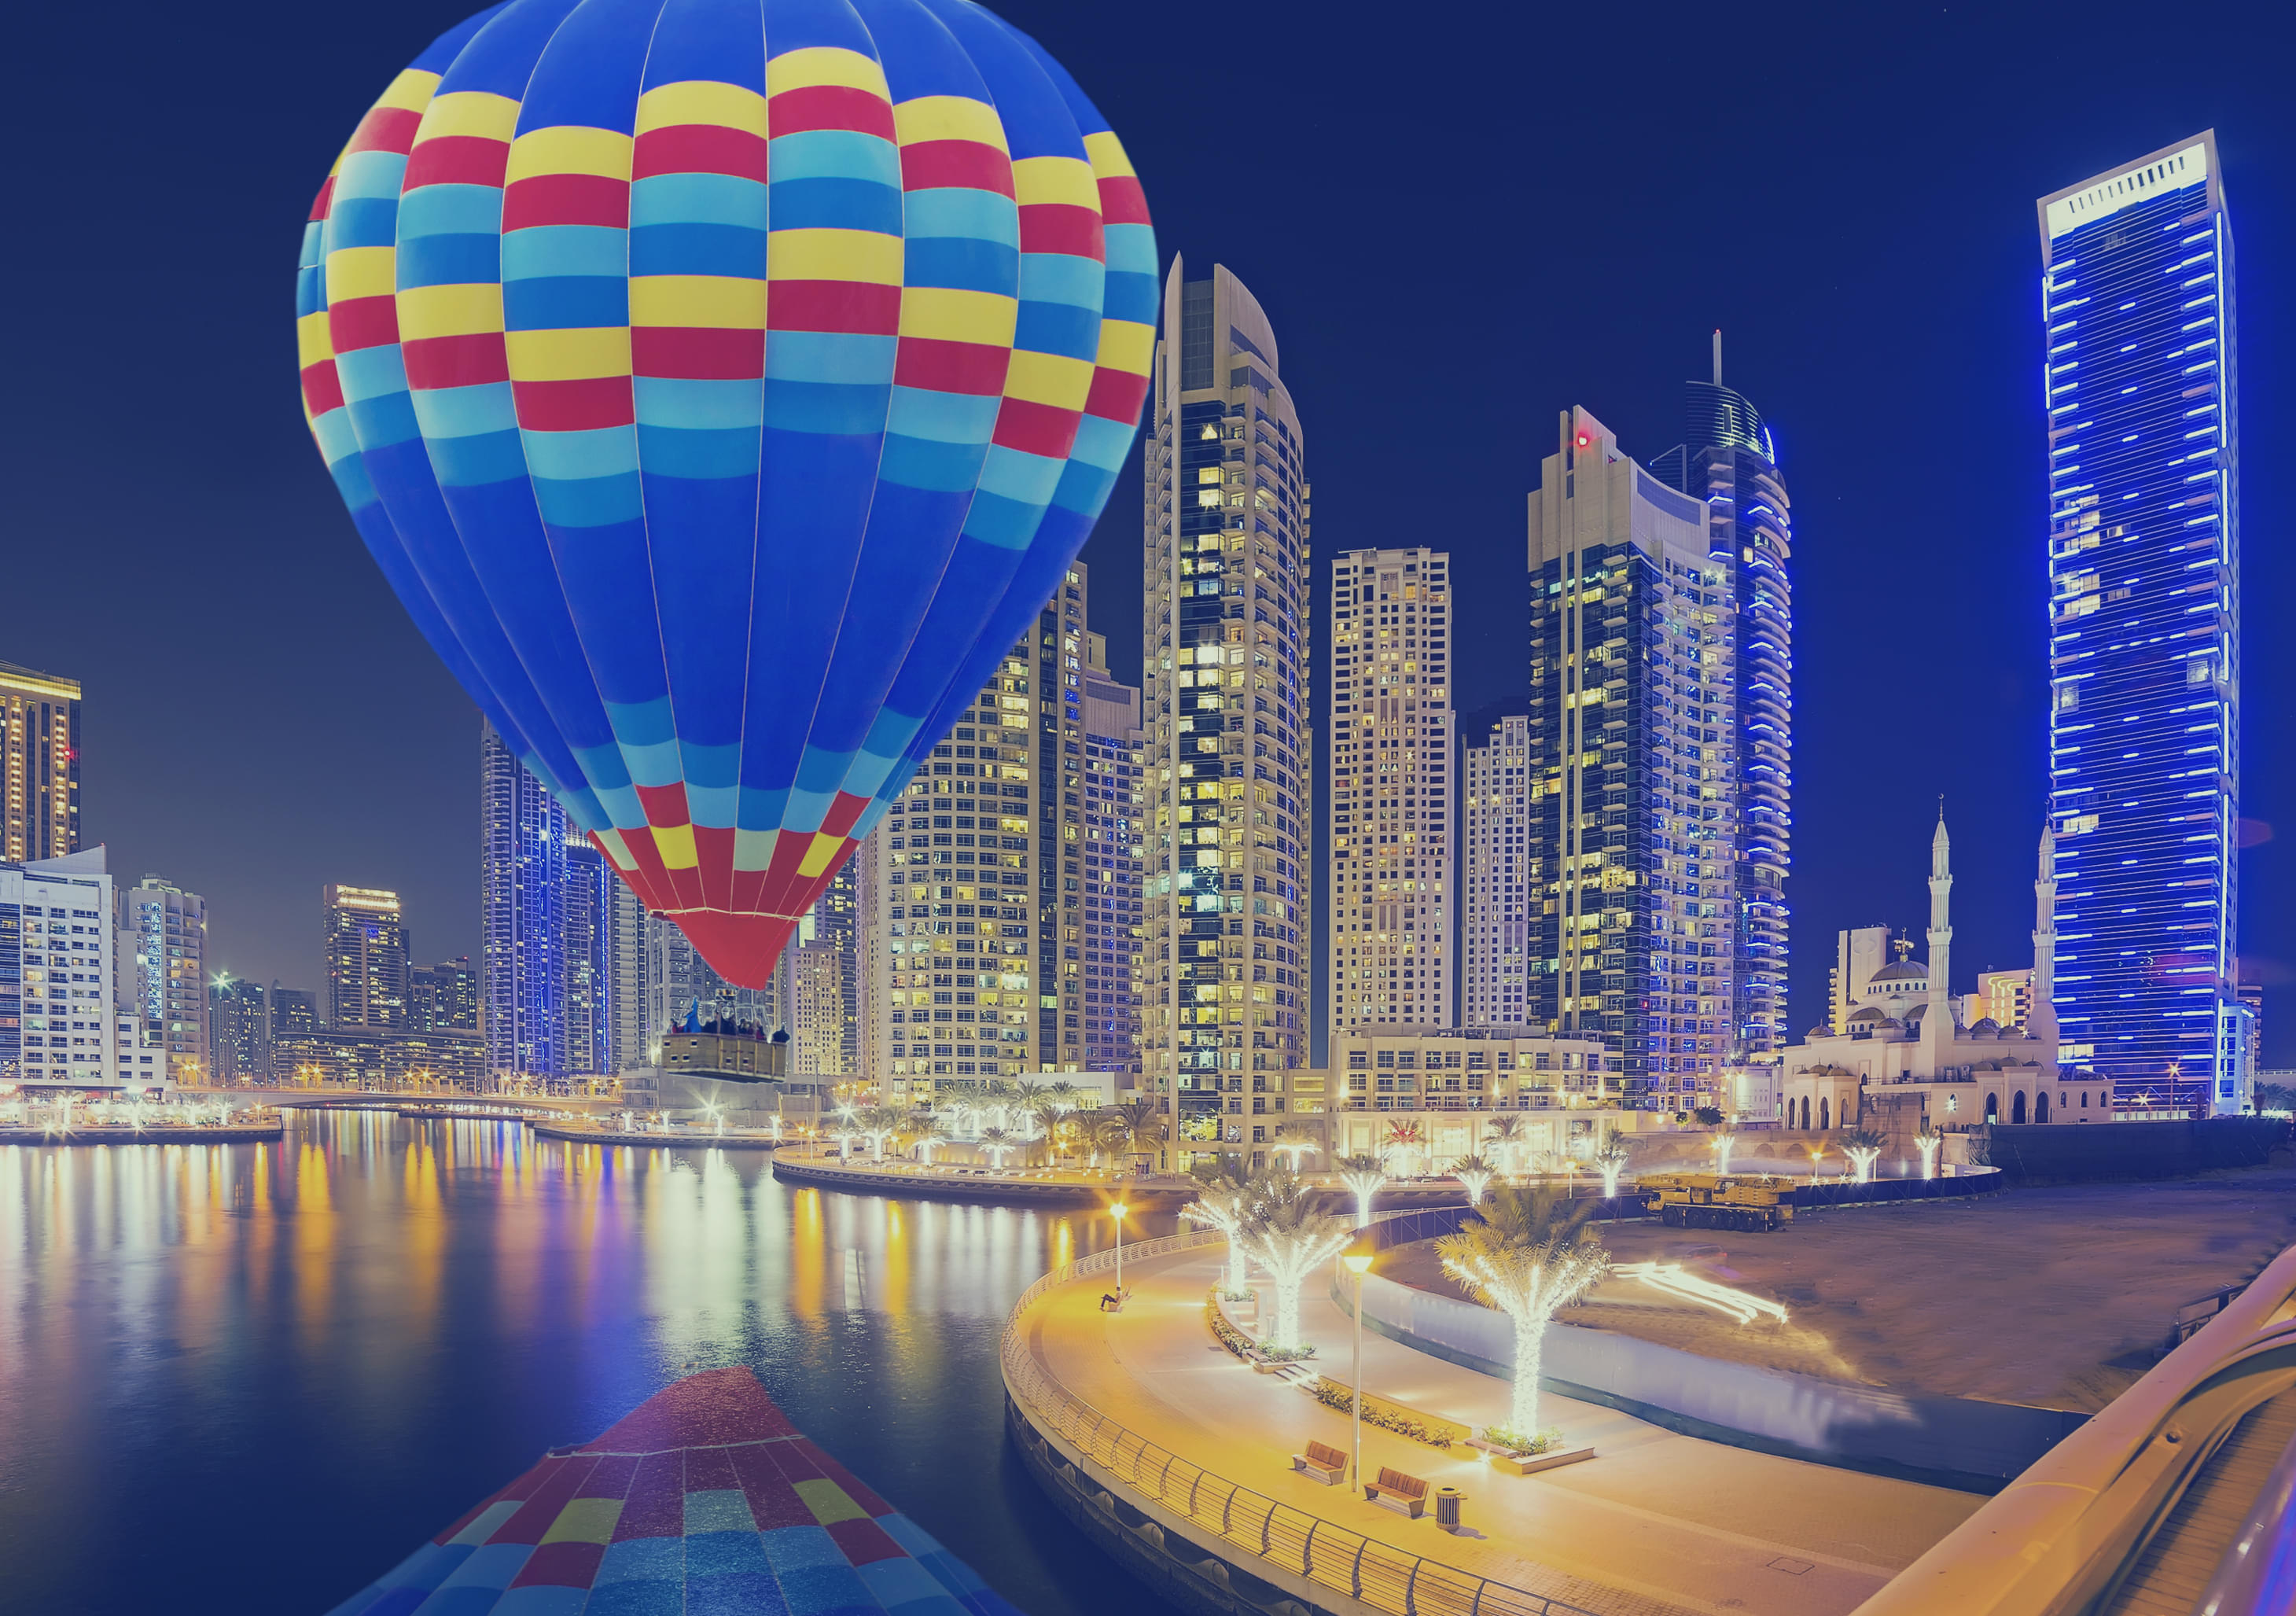 Hot Air Balloon Ride at Dubai Marina Mosque Night Skyline